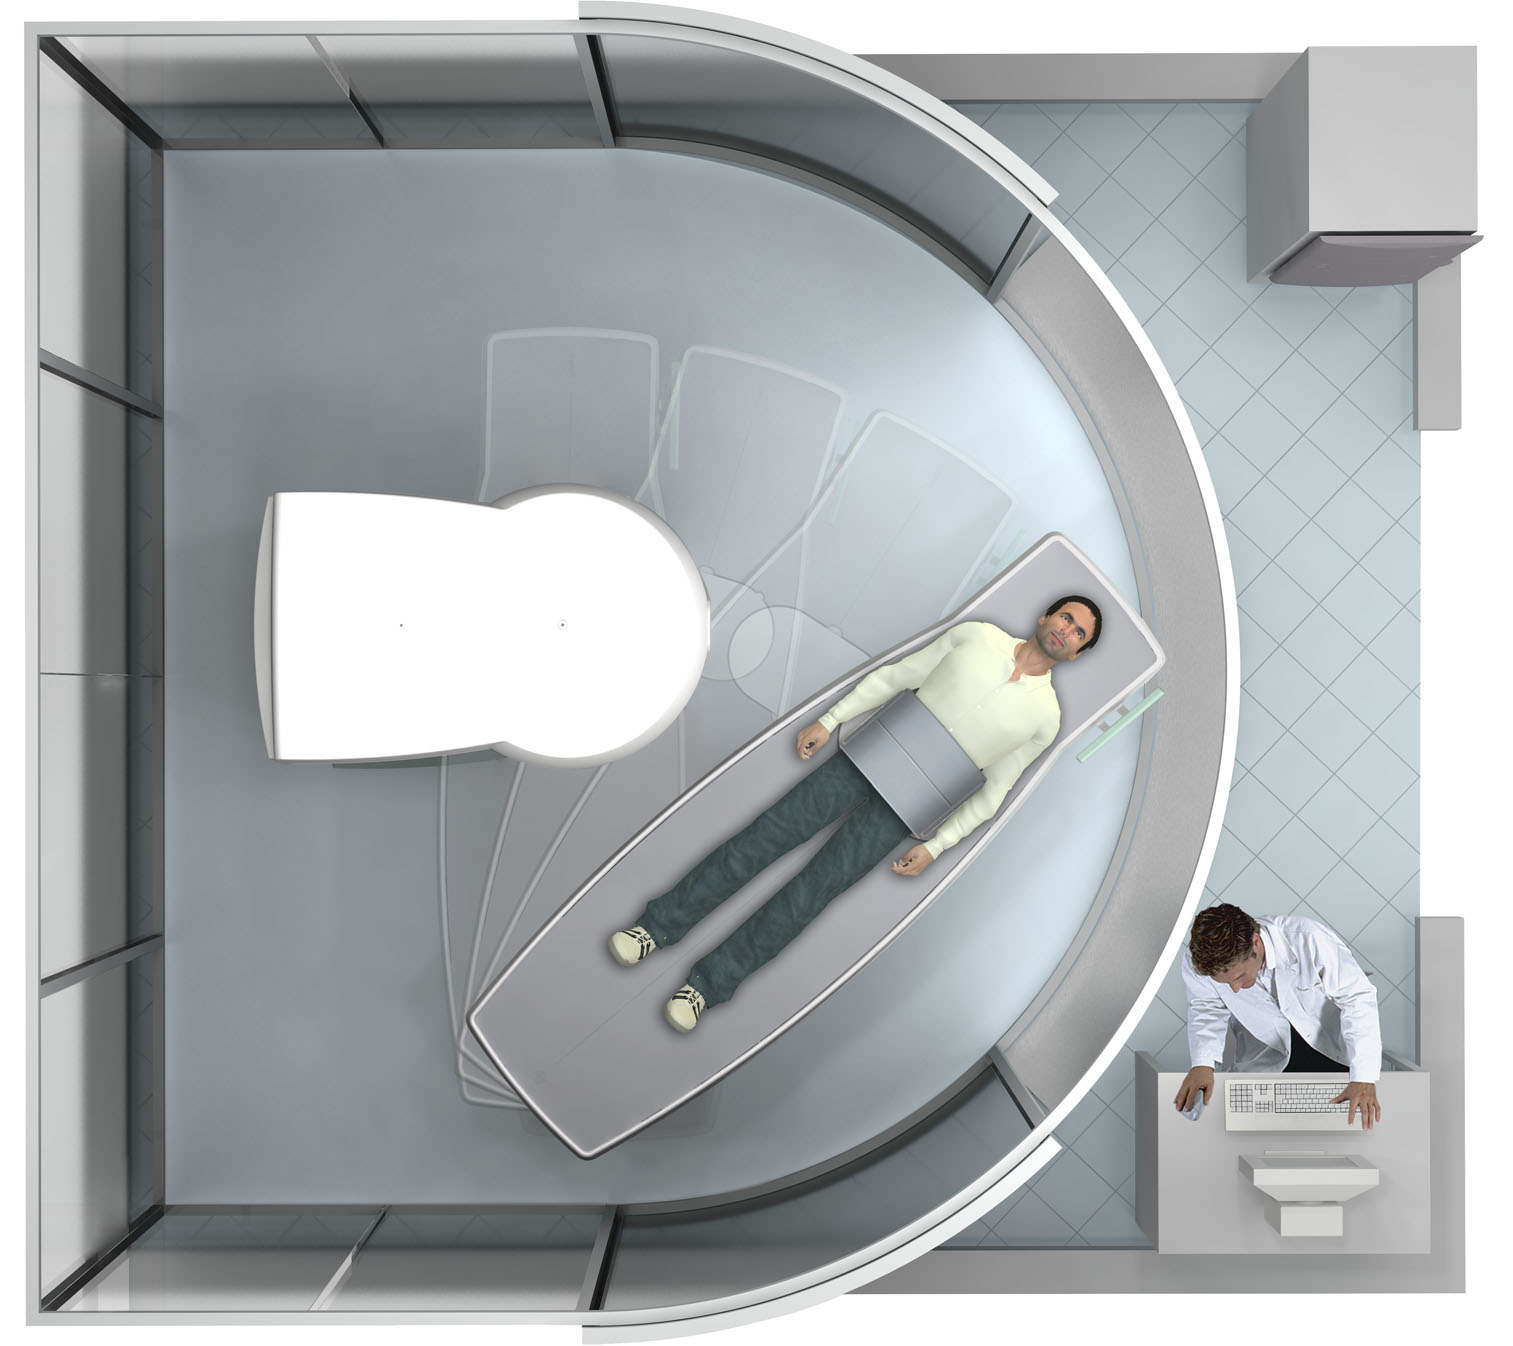 Rezonans magnetyczny (MRI) ESAOTE S-Scan